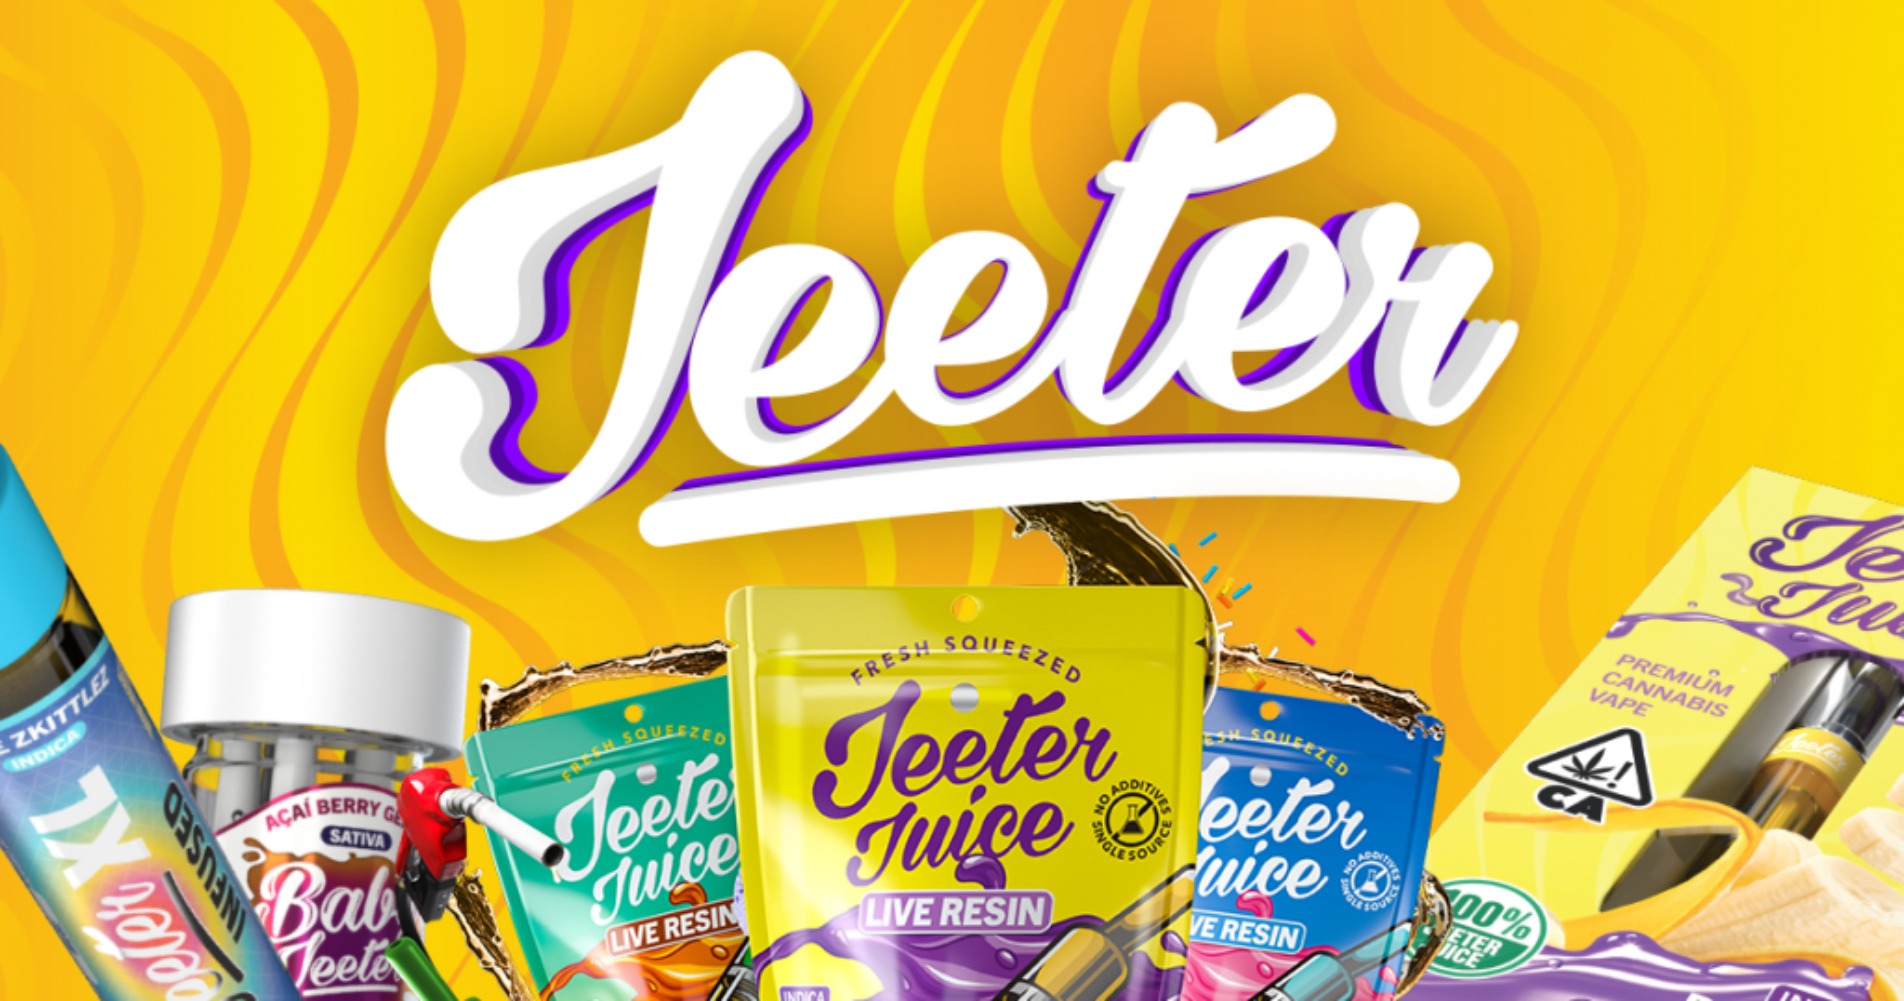 jeeters best weed brand in LA